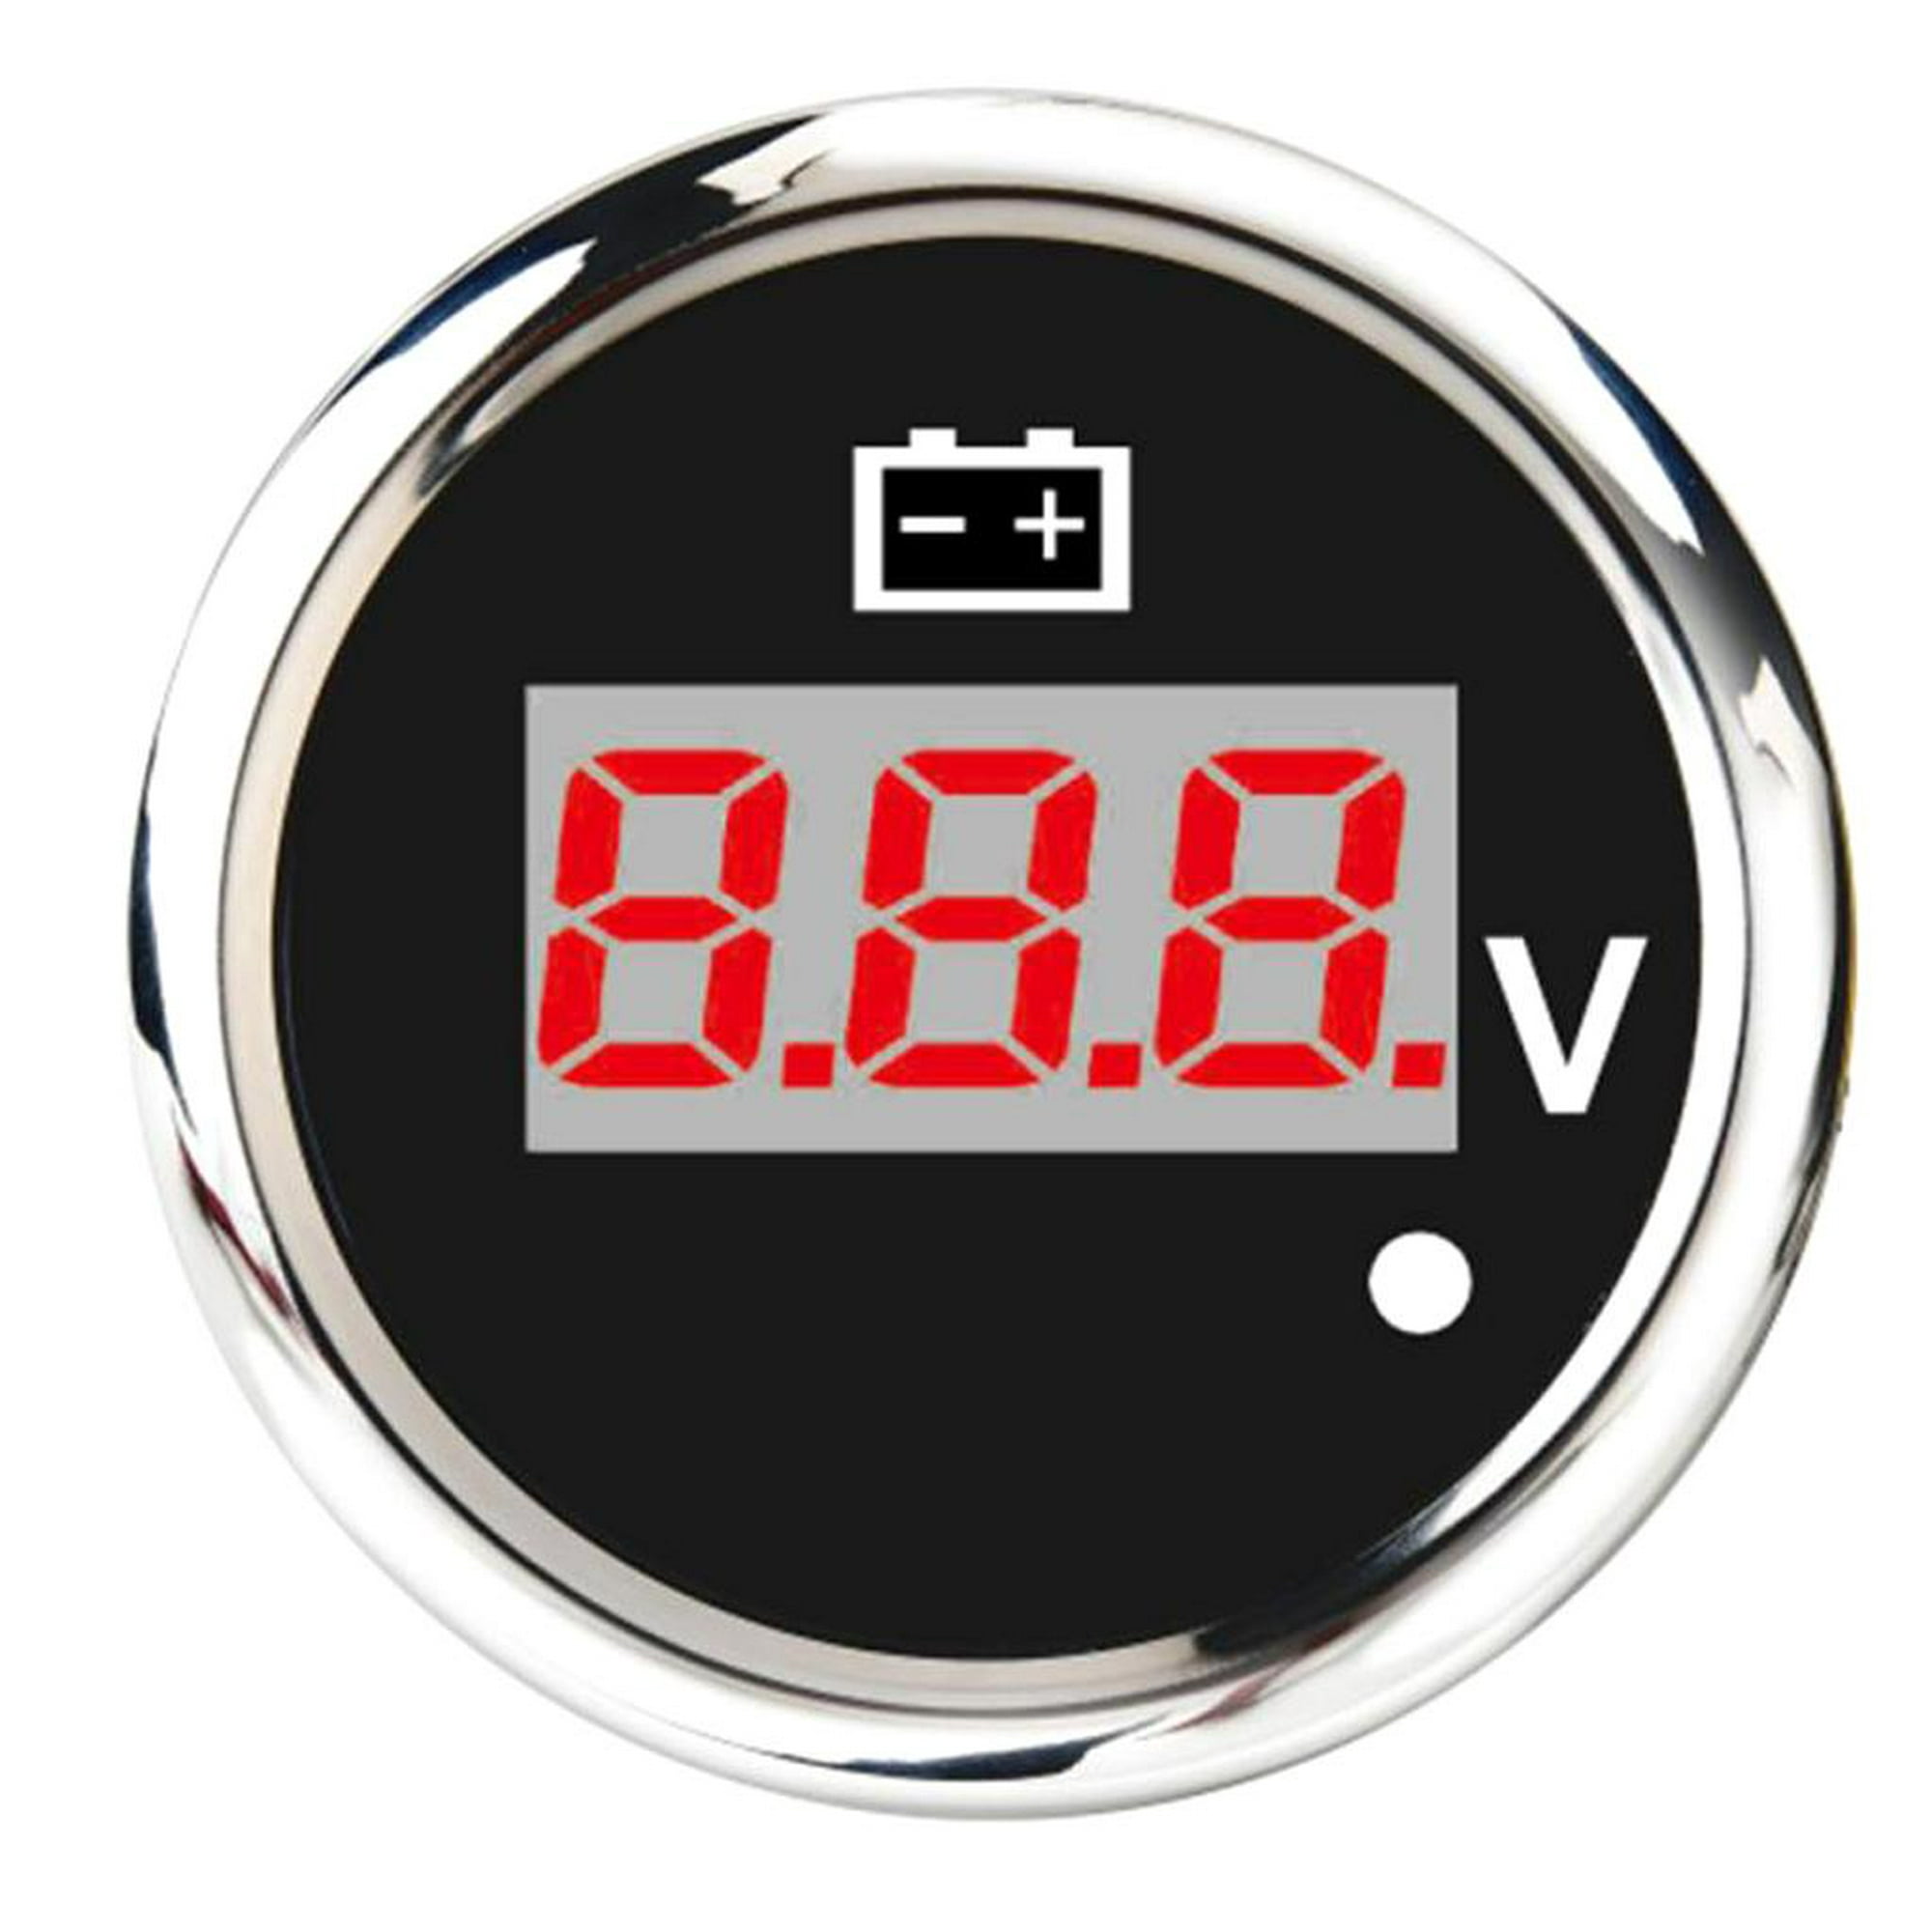 Voltímetro digital LED 12V 24V medidor de voltaje para coche, barco, RV,  camión, motocicleta, cámper, batería, medidor de voltaje, enchufe